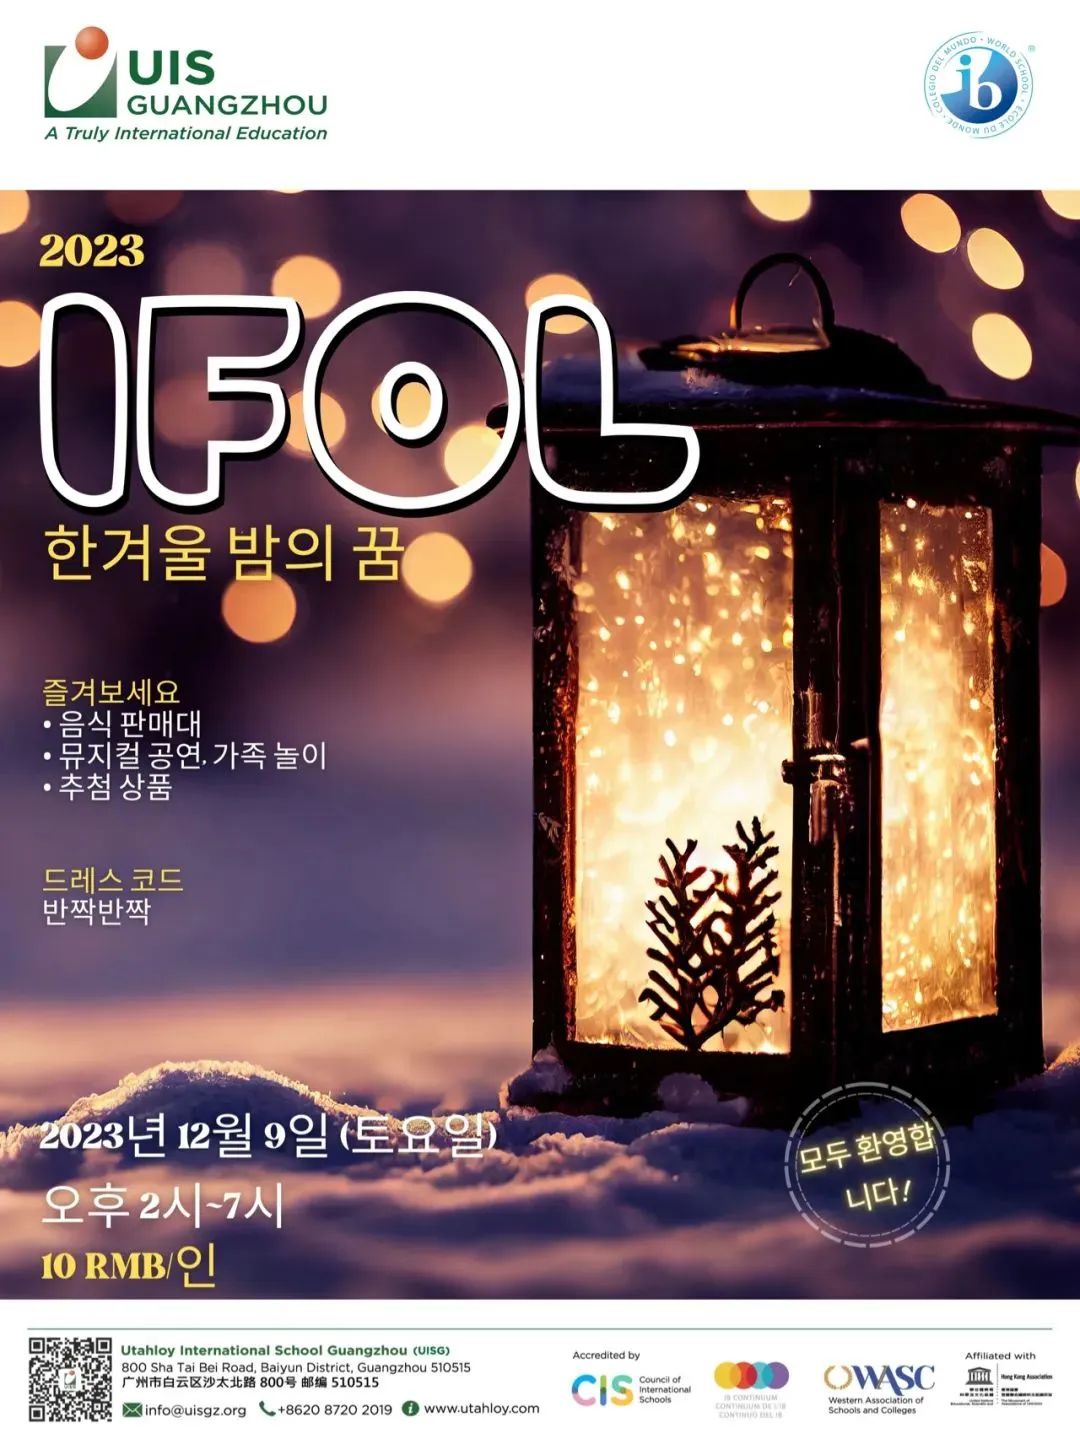 IFOL| 誉德莱年度国际灯光秀 International Festival of Light at UISG (9 Dec 2023)